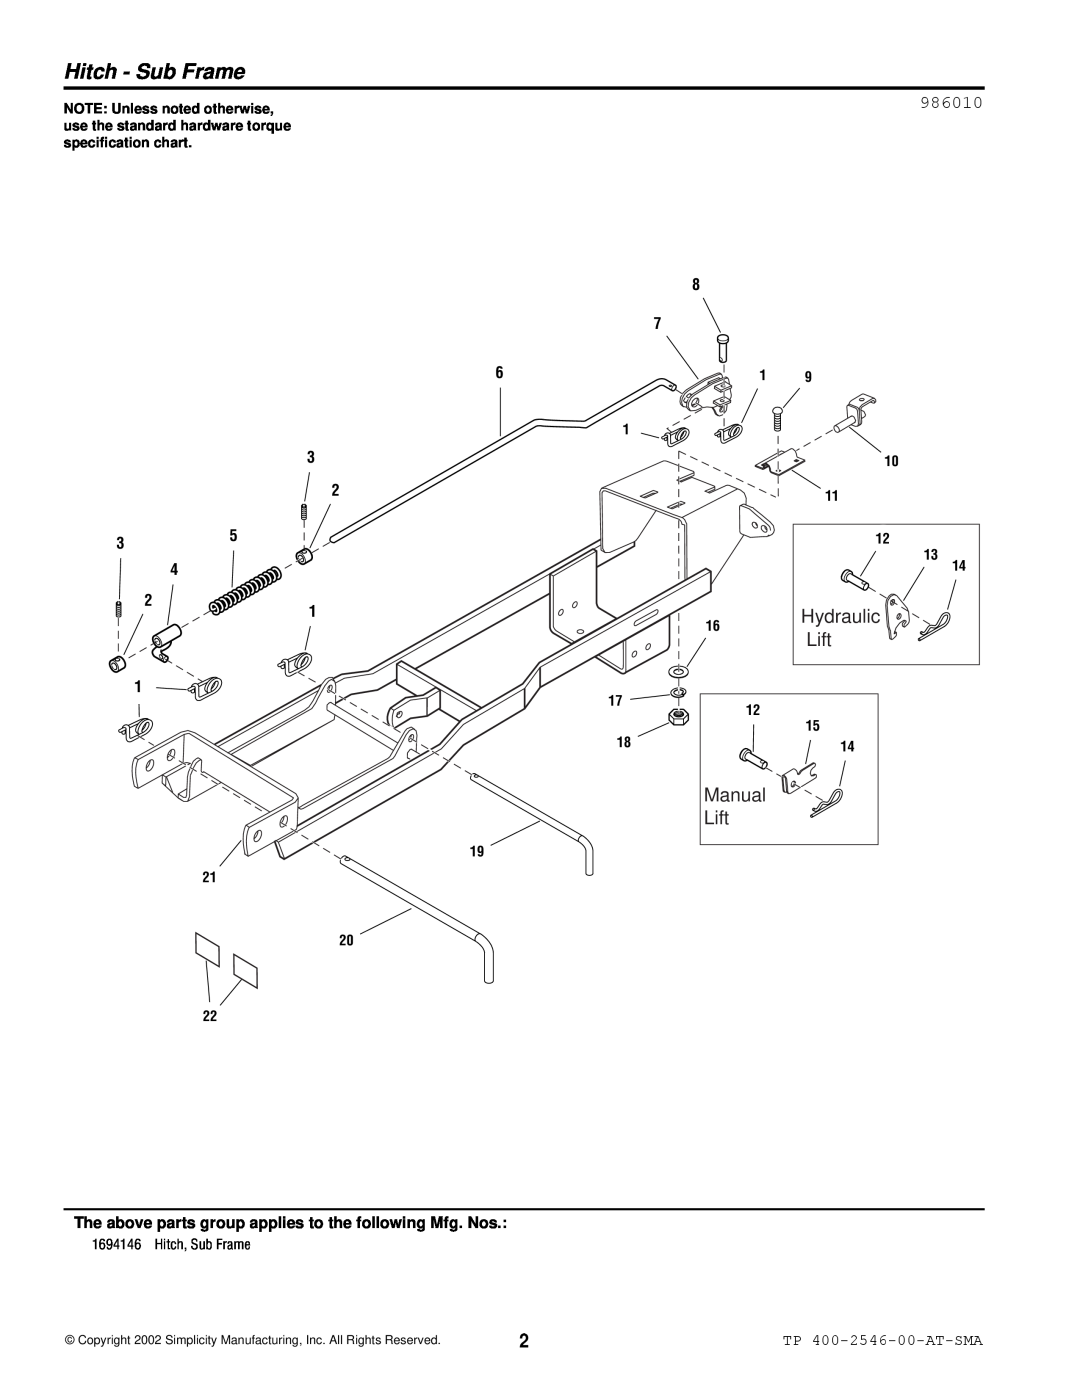 Simplicity 1694146 manual Hitch - Sub Frame, Hydraulic Lift, ManualLift, 986010, TP 400-2546-00-AT-SMA 